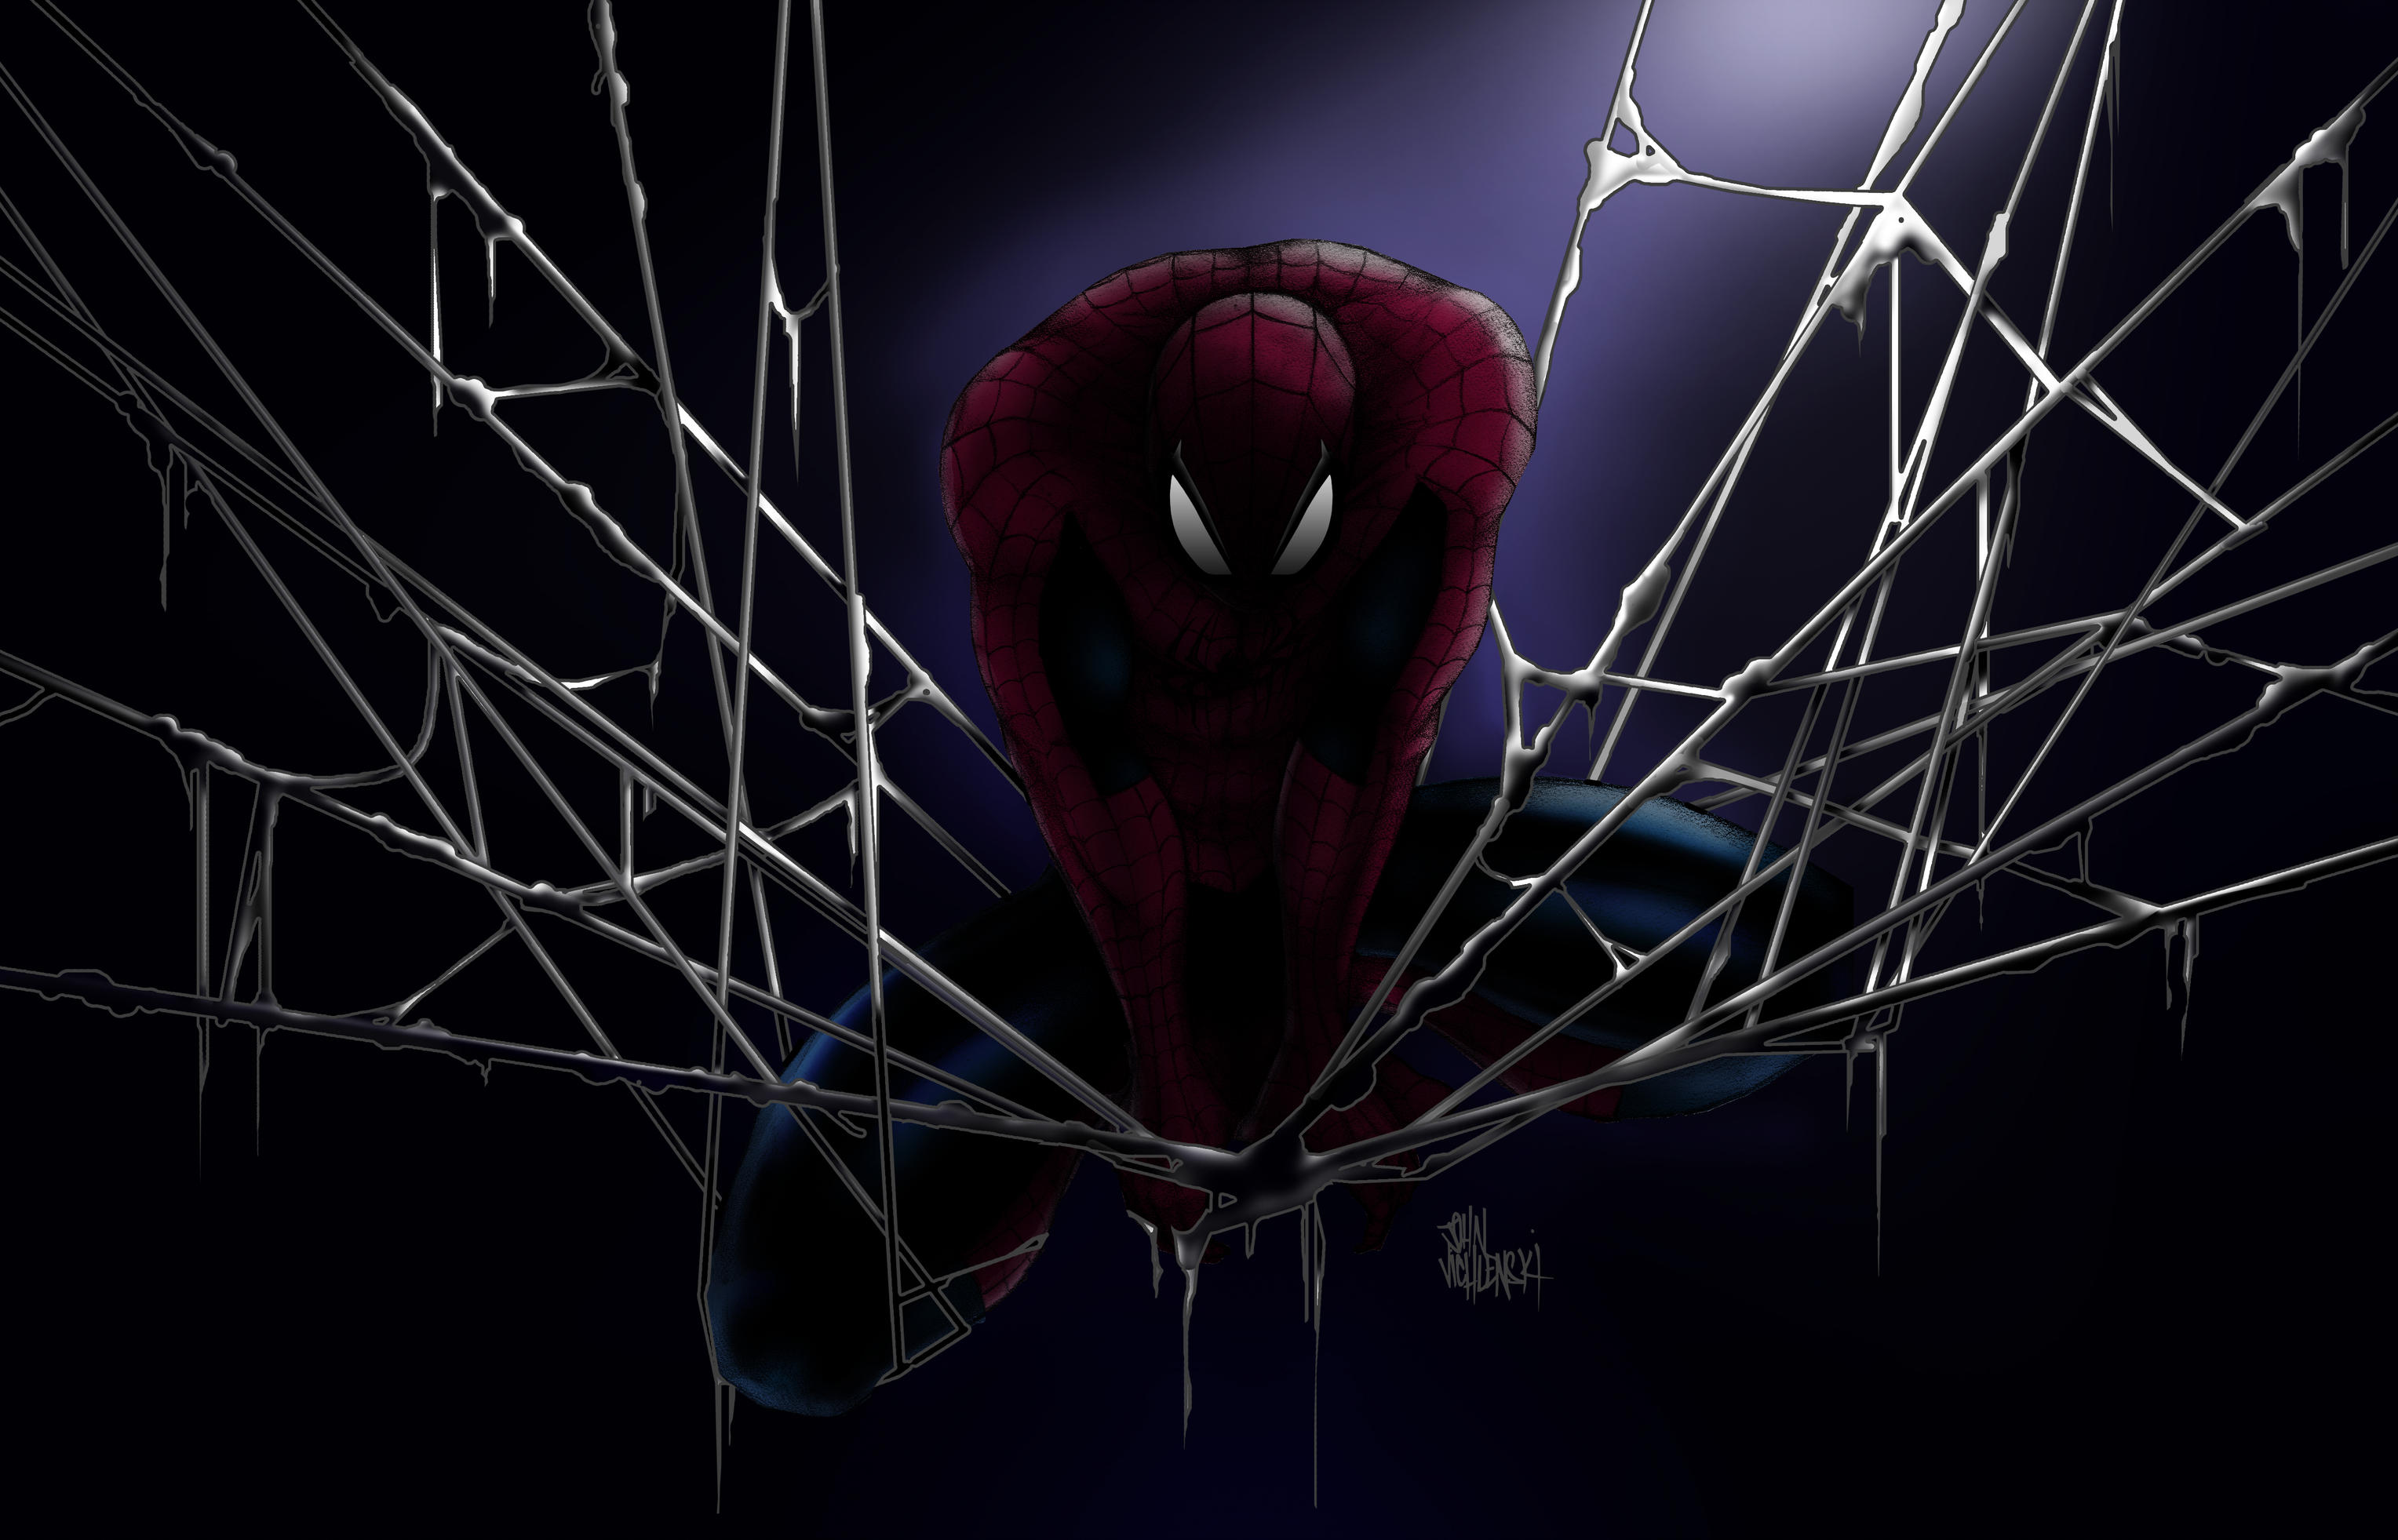 49+ Depth Effect Wallpaper Spiderman Images - Best Wallpapers